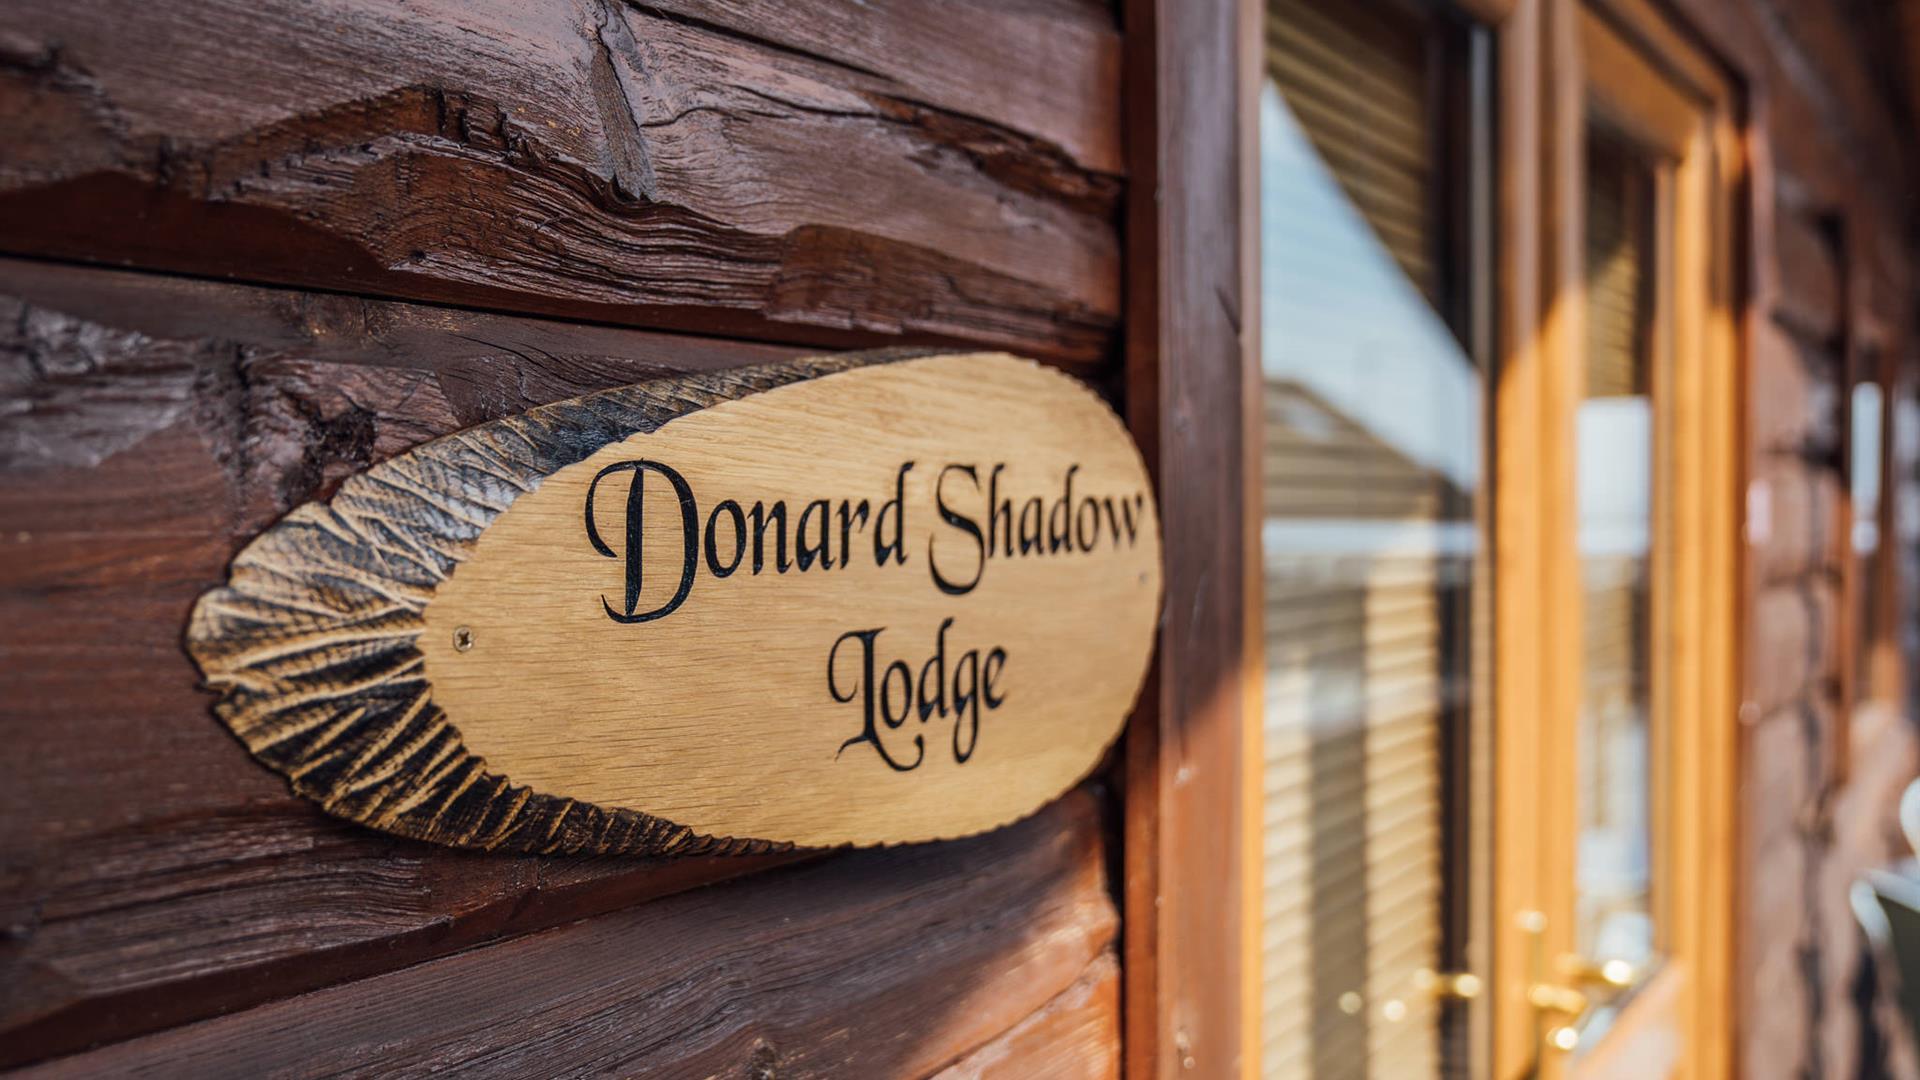 Donard's Shadow Lodge